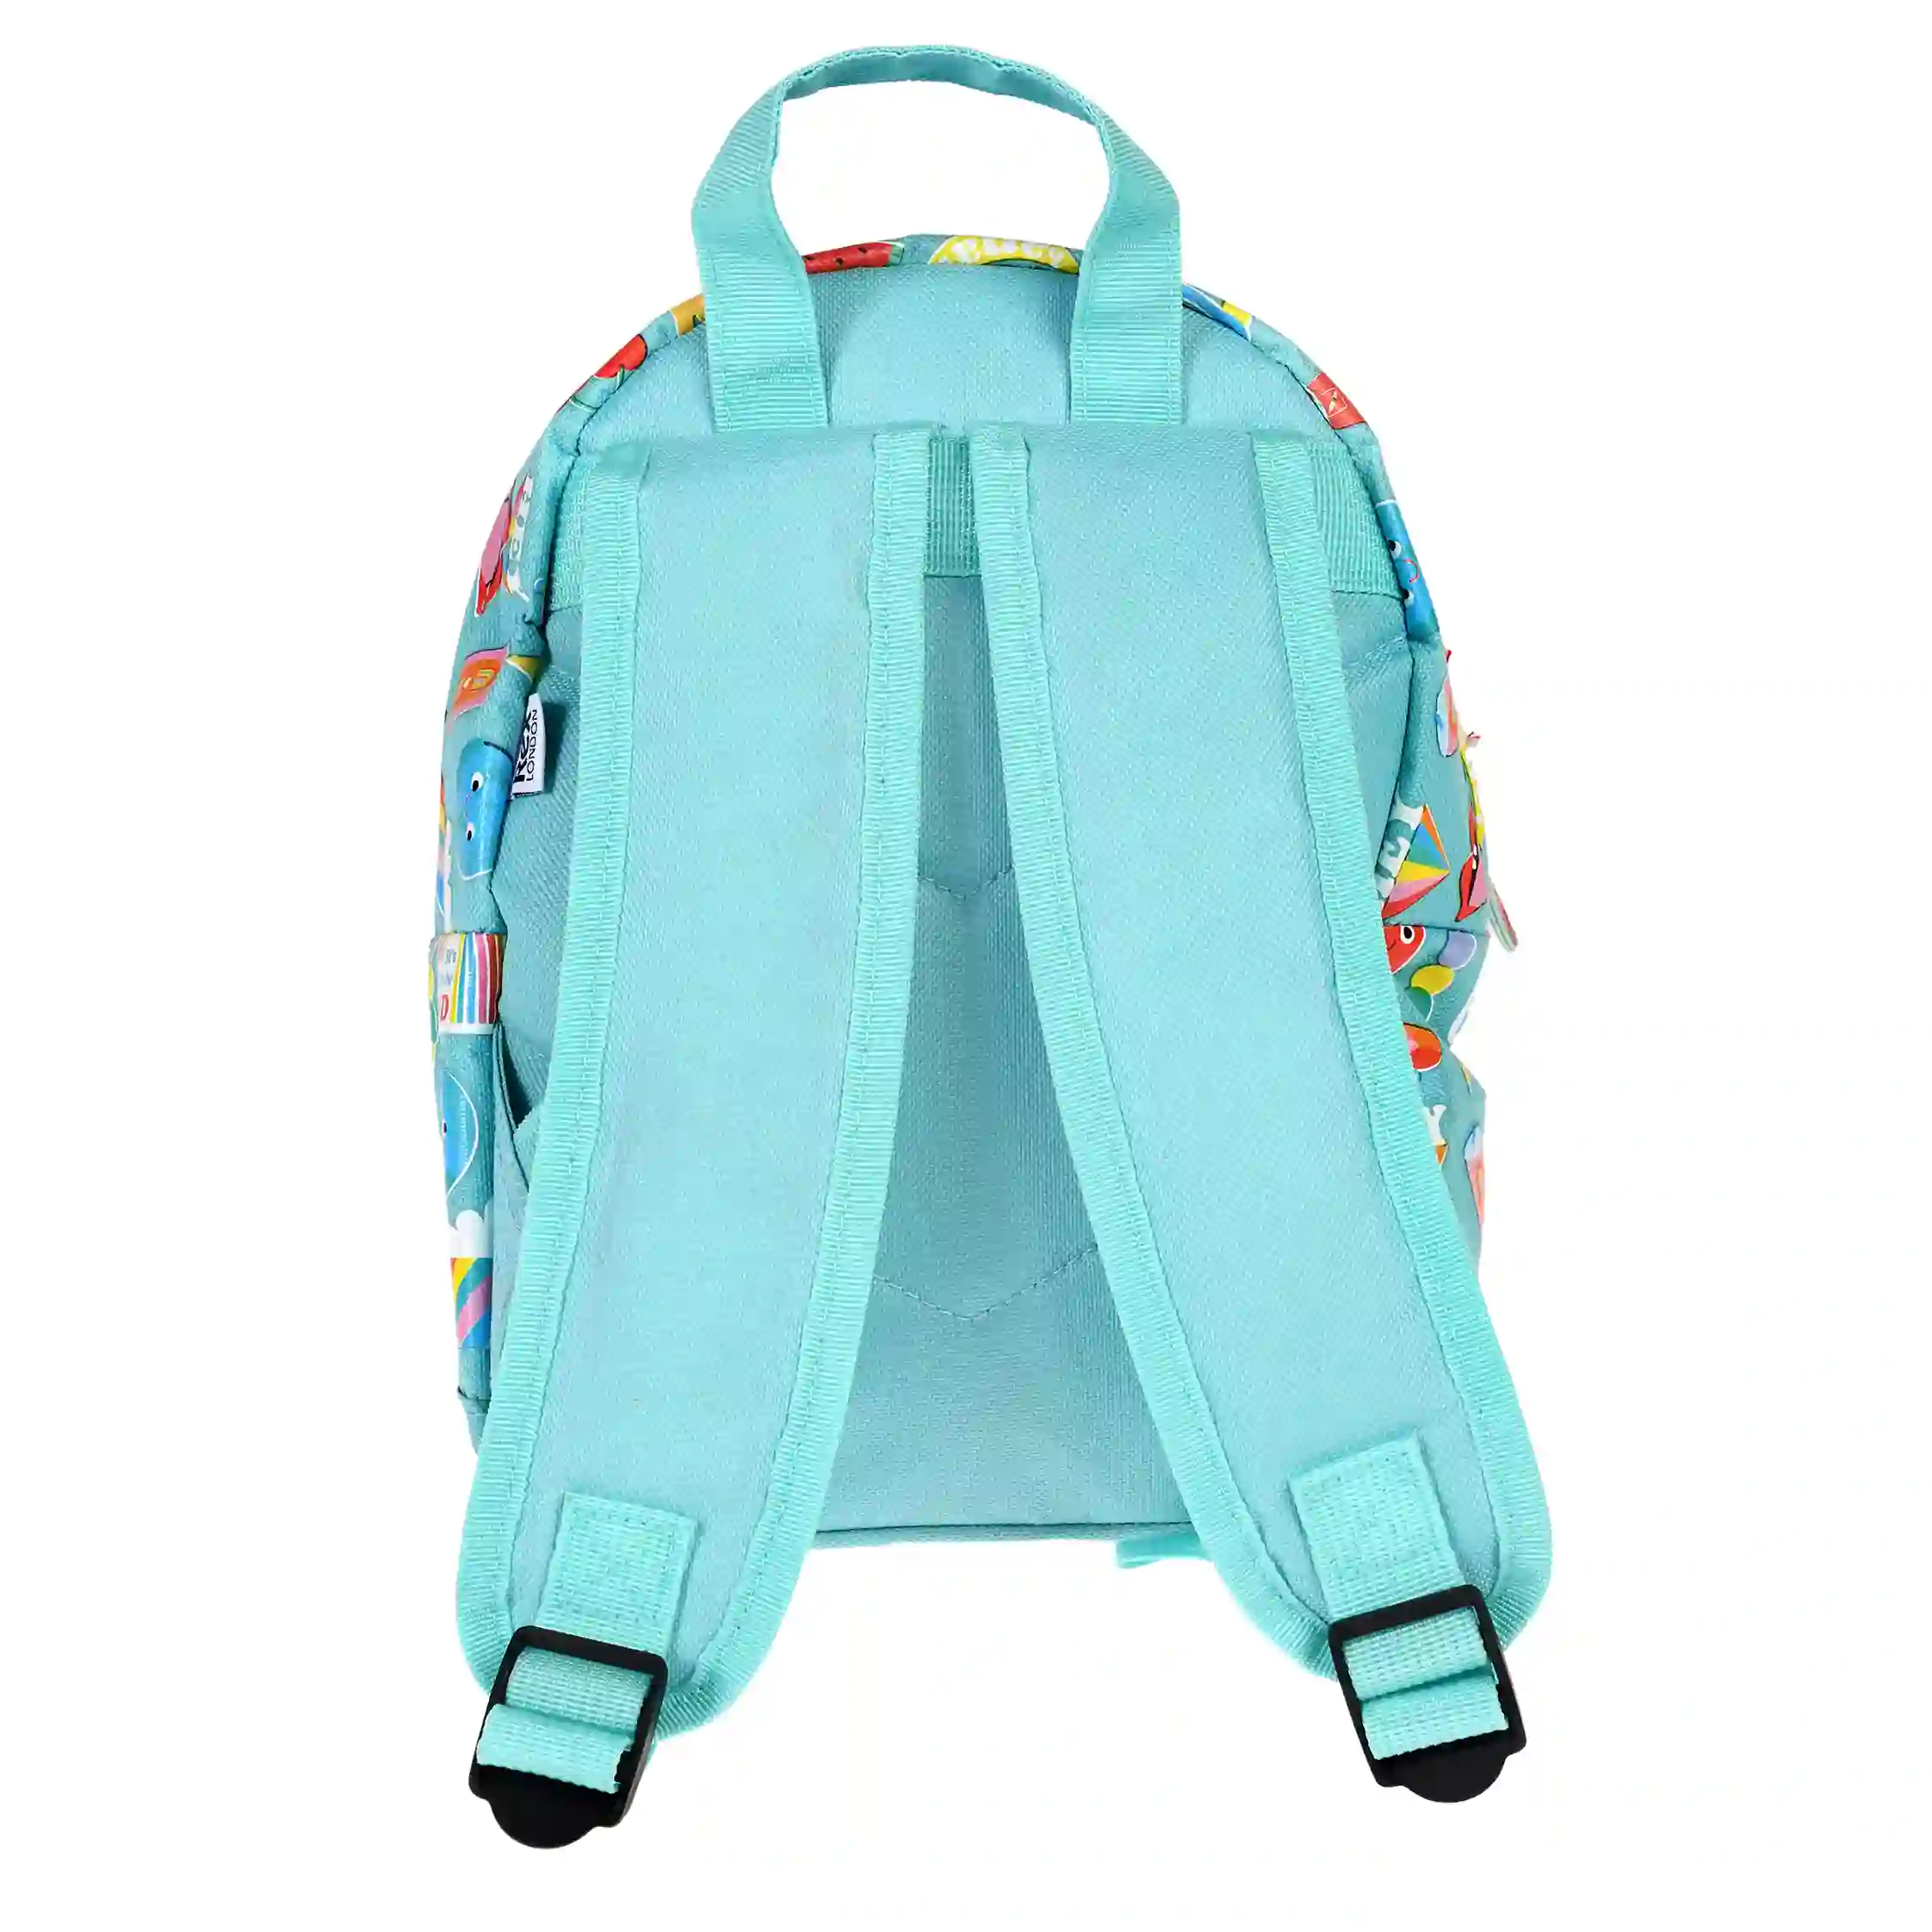 mini children's backpack - top banana